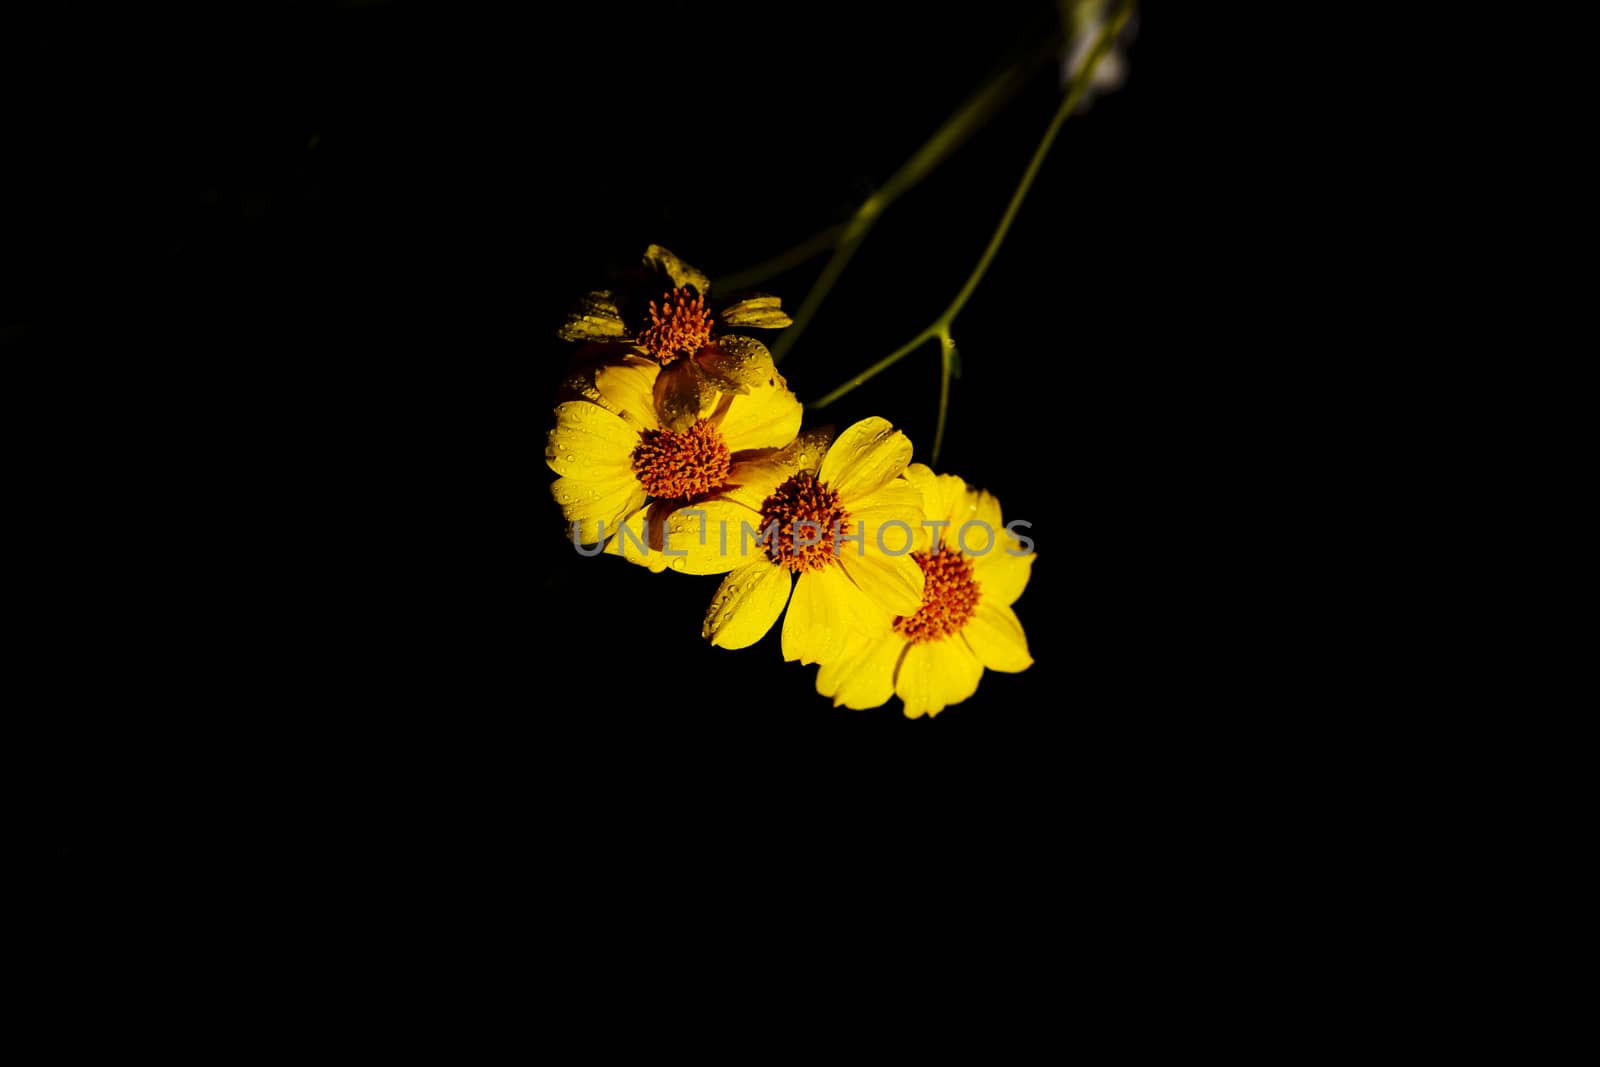 Black background with brittlebush flowers by fmcginn